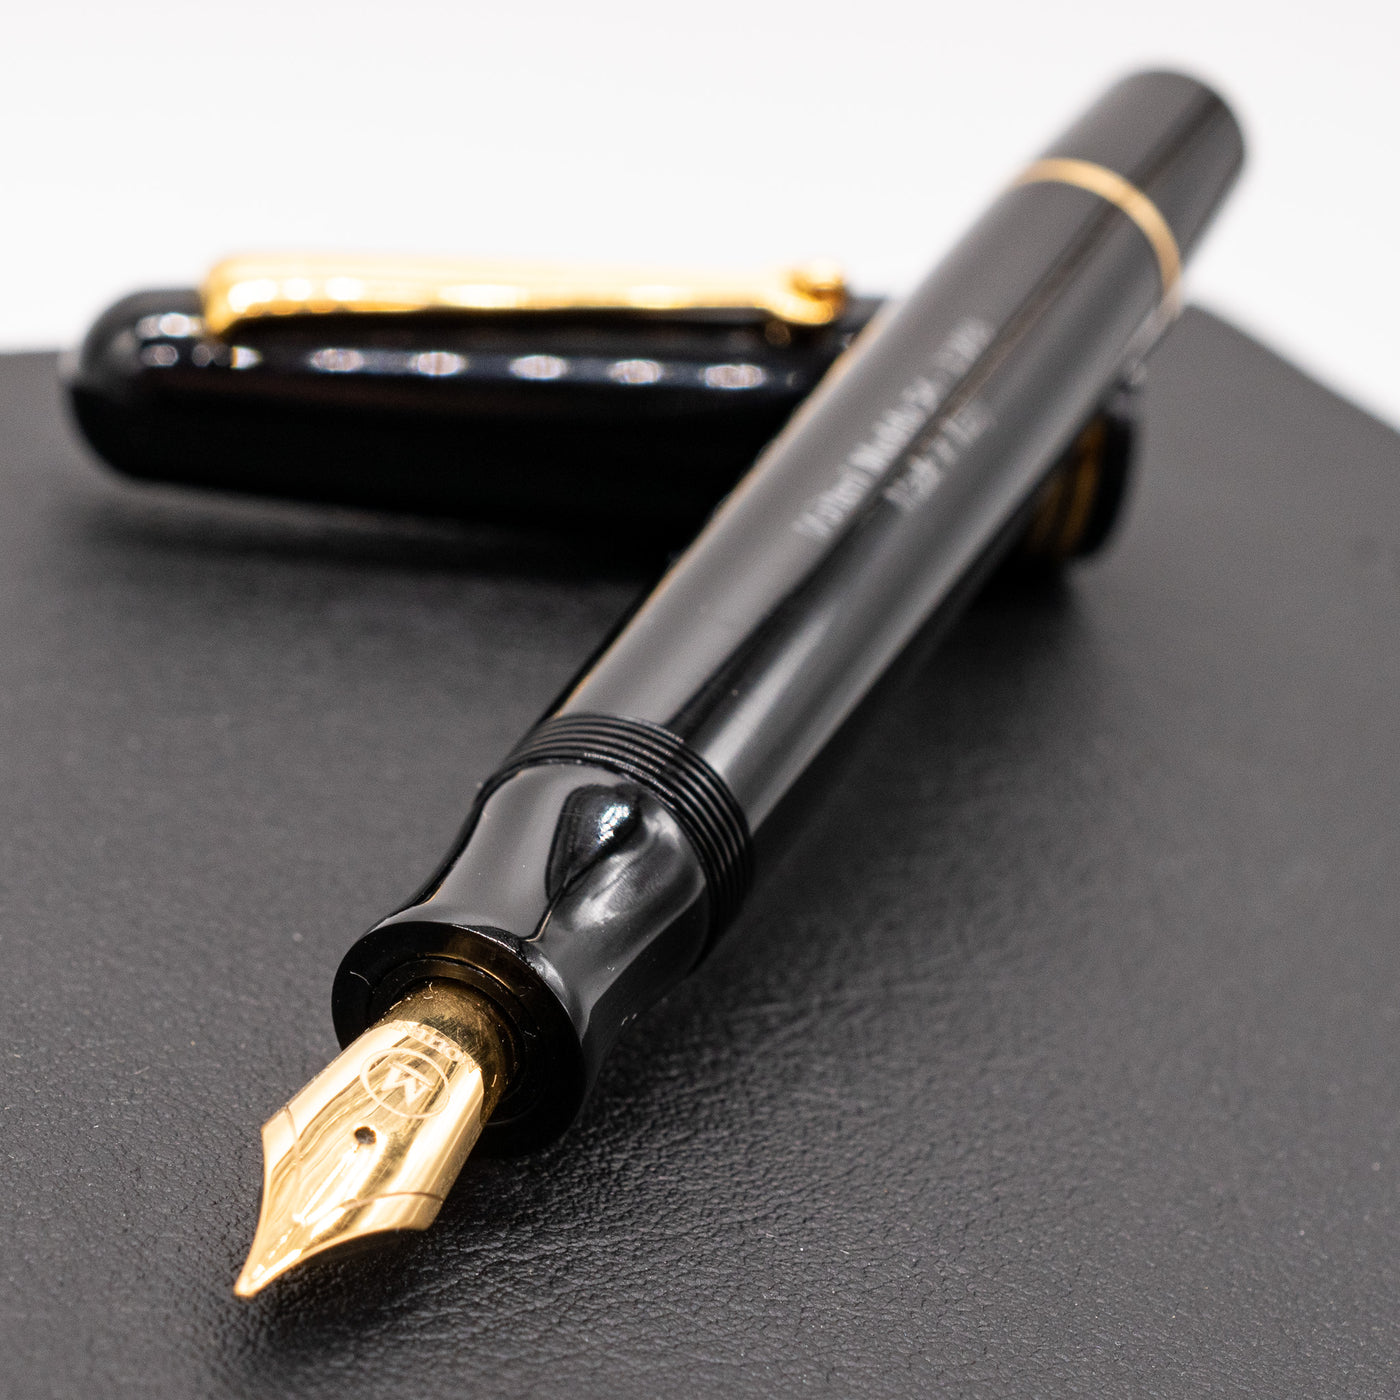 Molteni Modelo 54 Fountain Pen - Jet Black & Gold uncapped